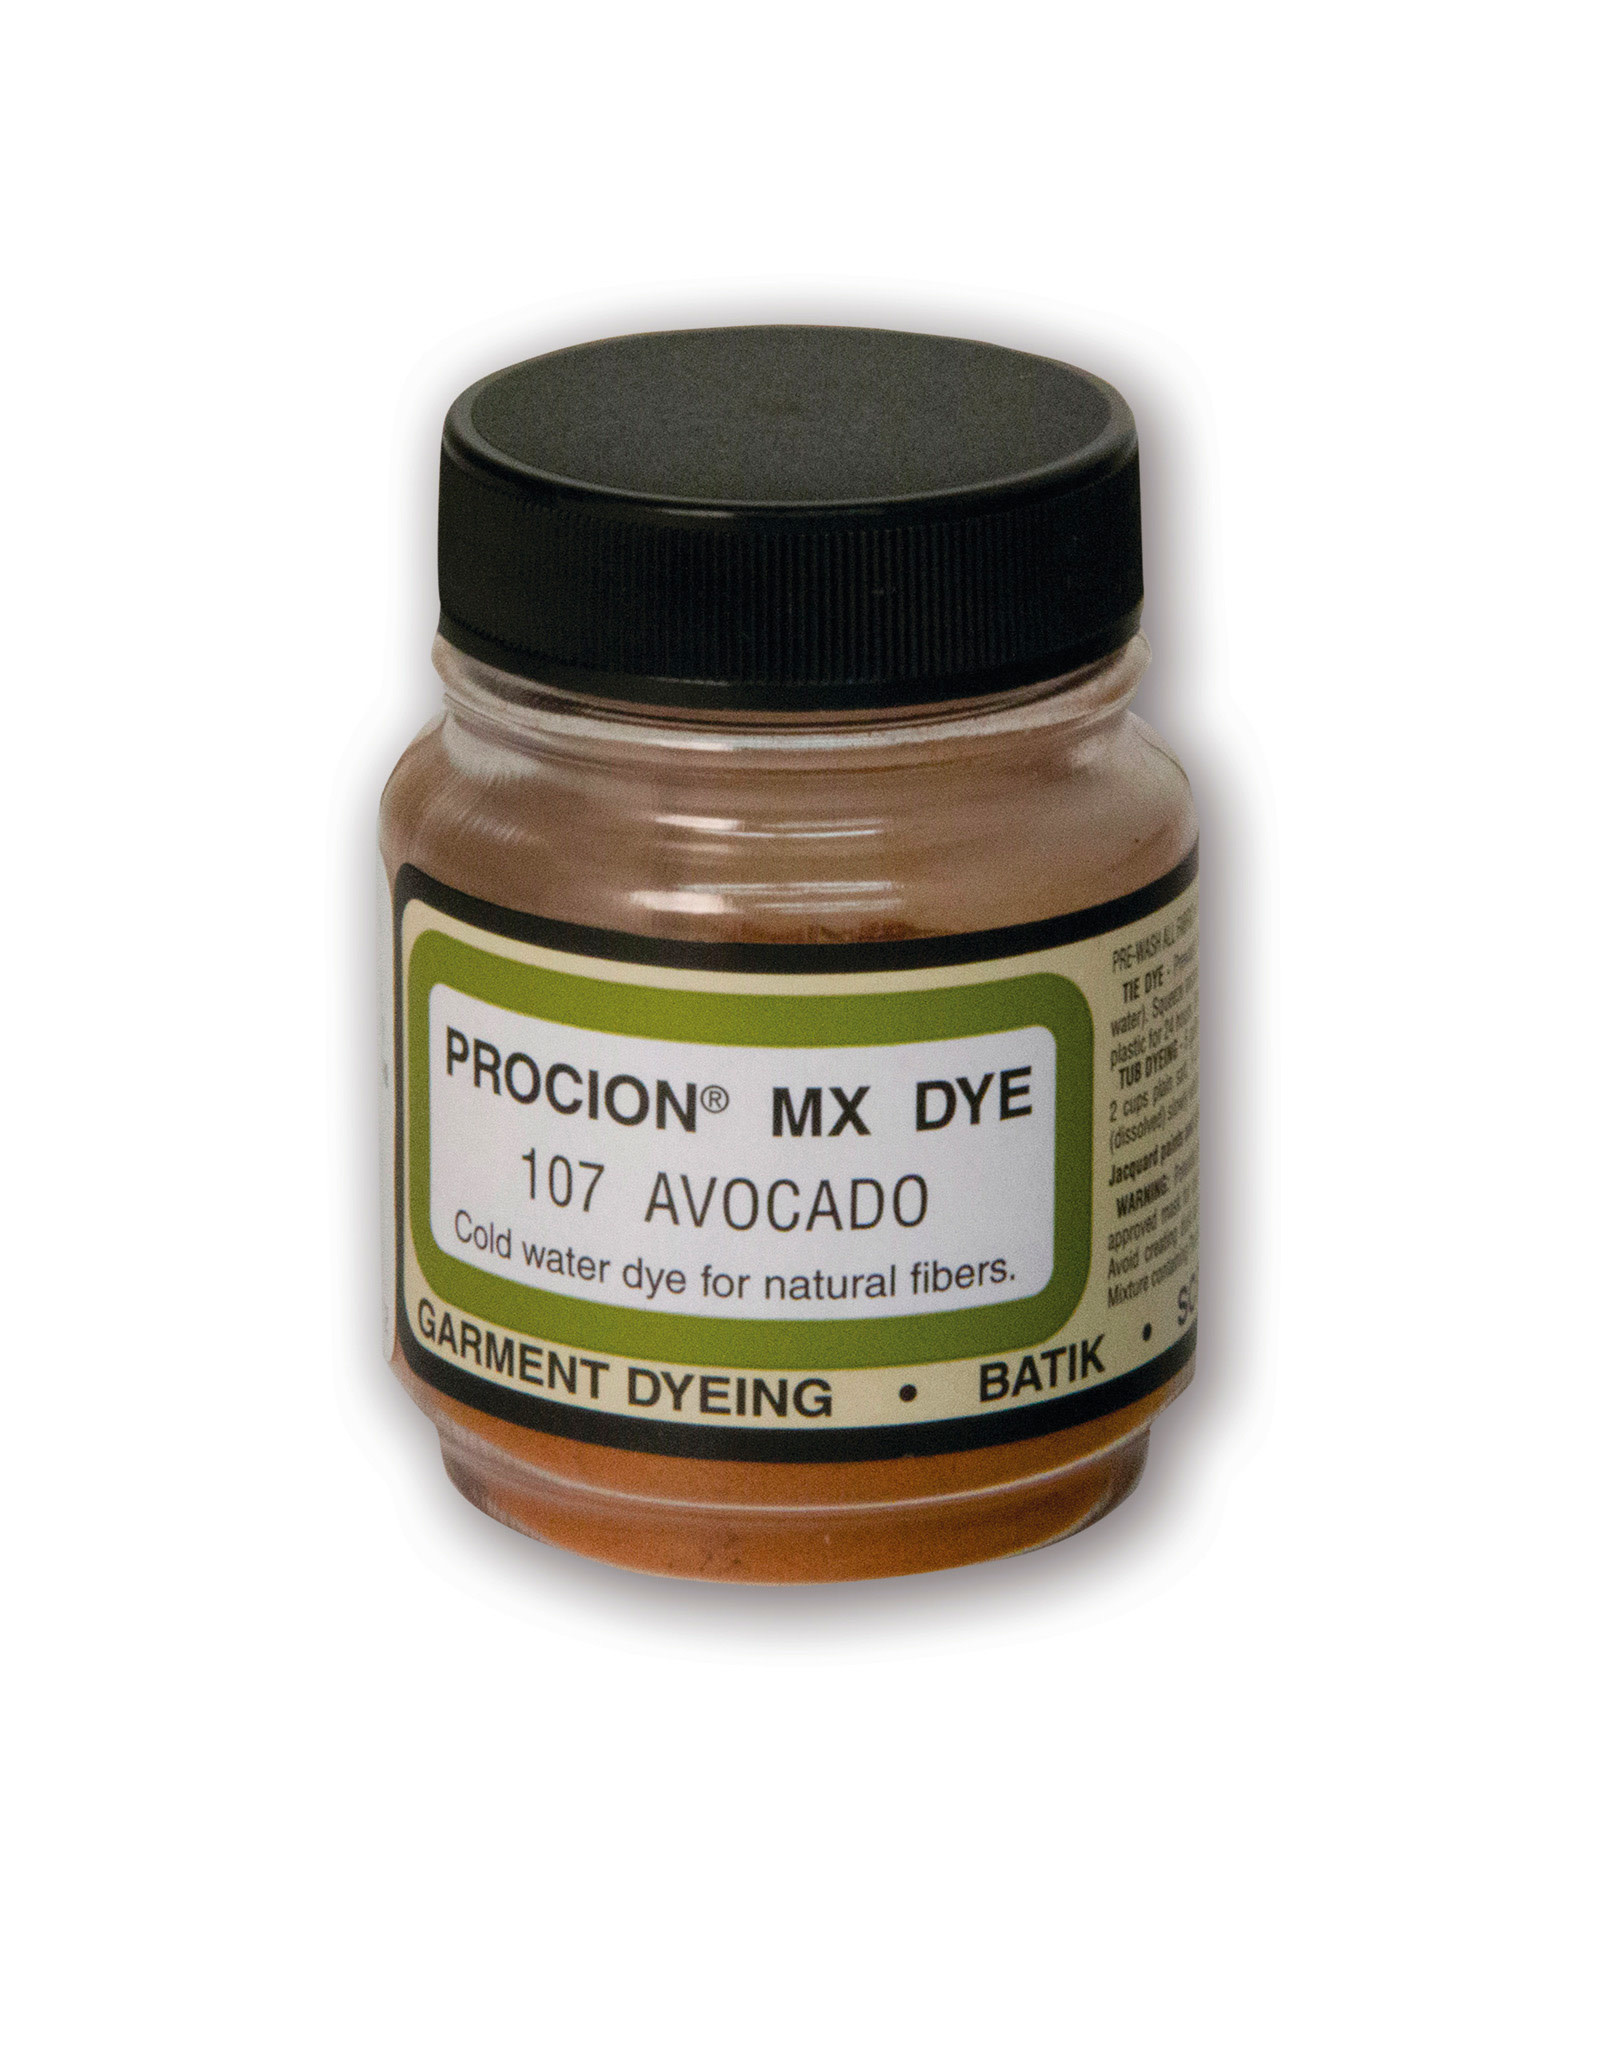 Jacquard Jacquard Procion Mx Dye, Avocado 2/3oz